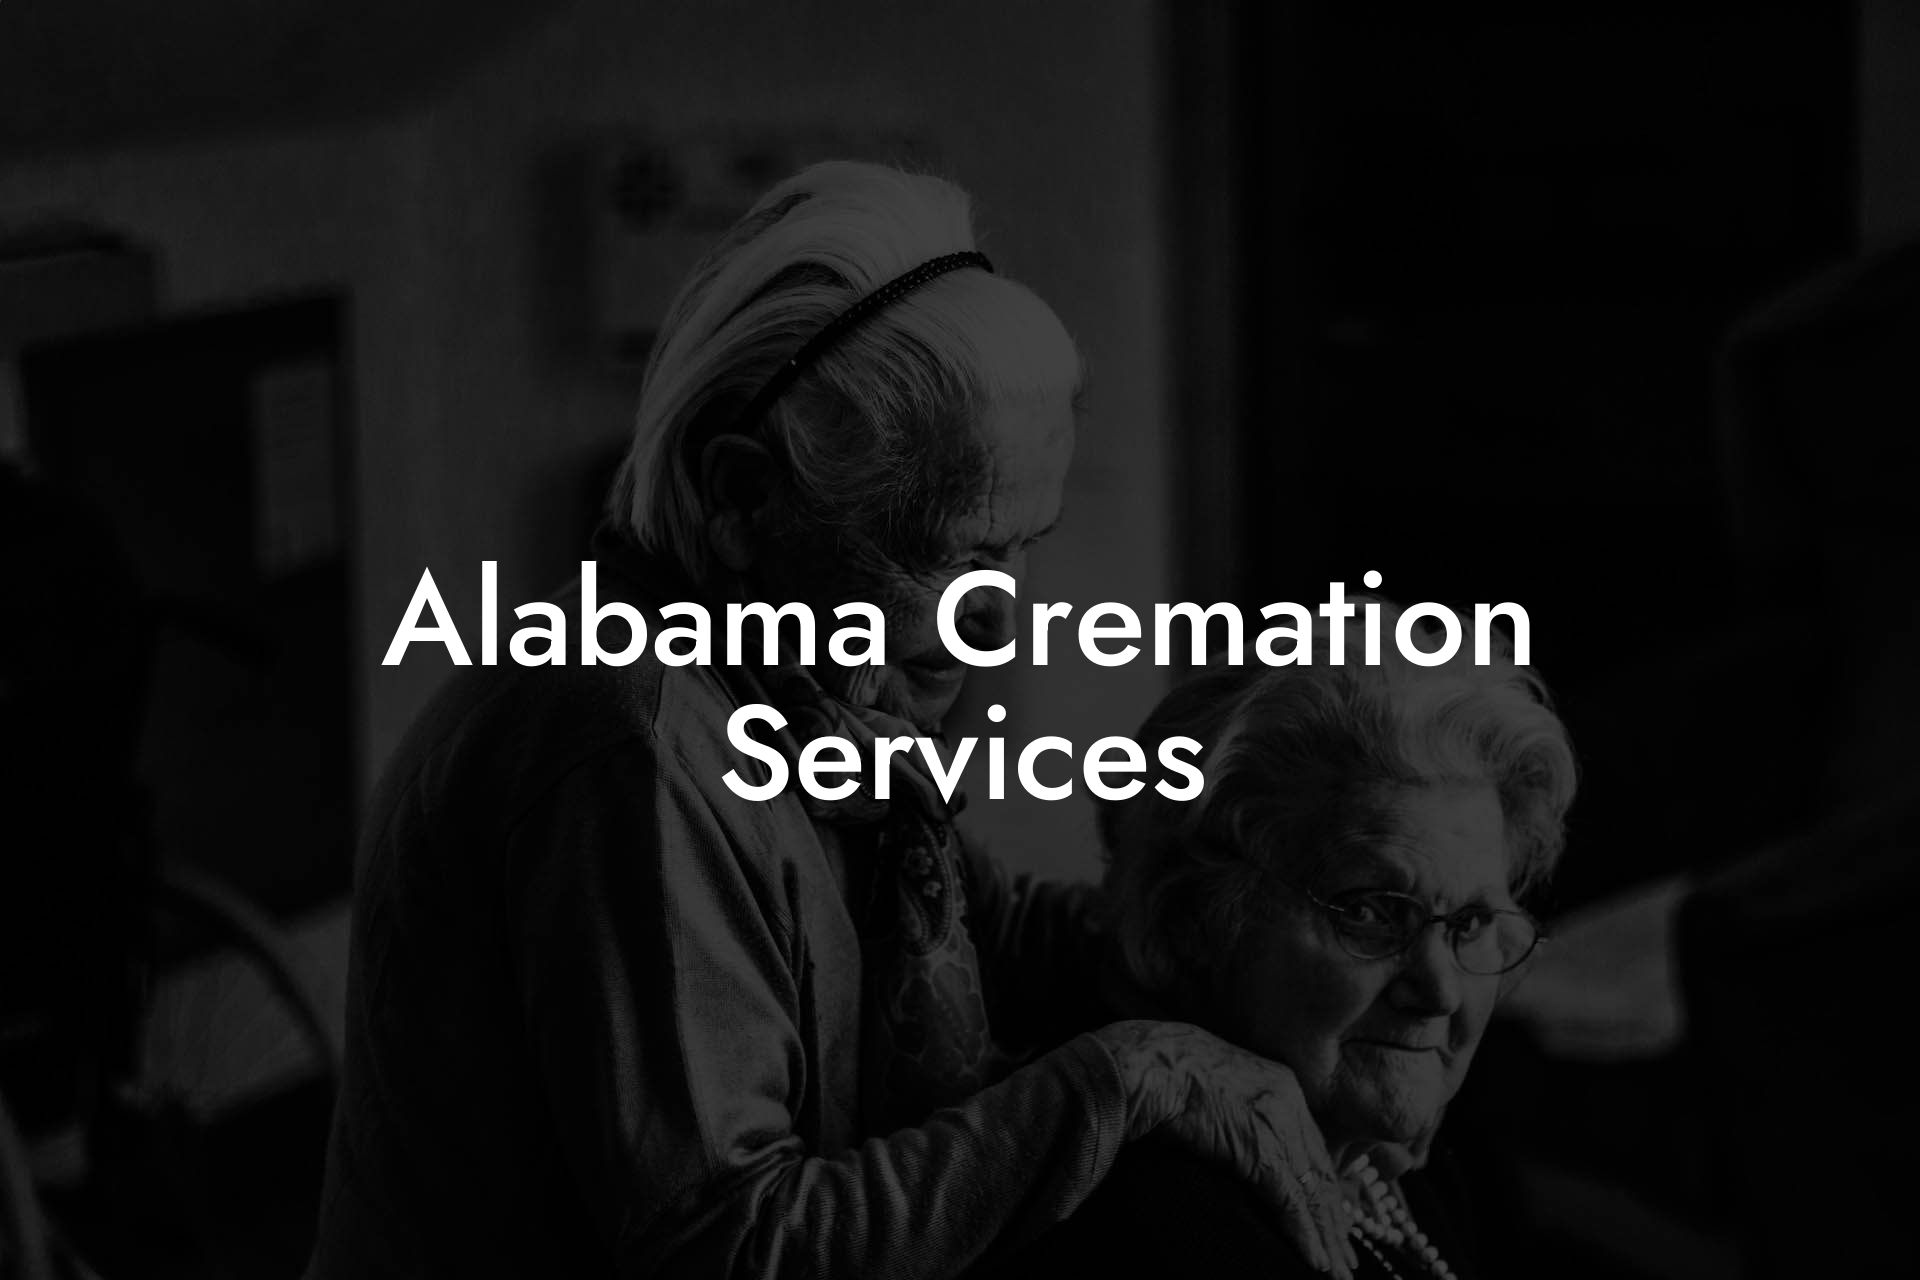 Alabama Cremation Services